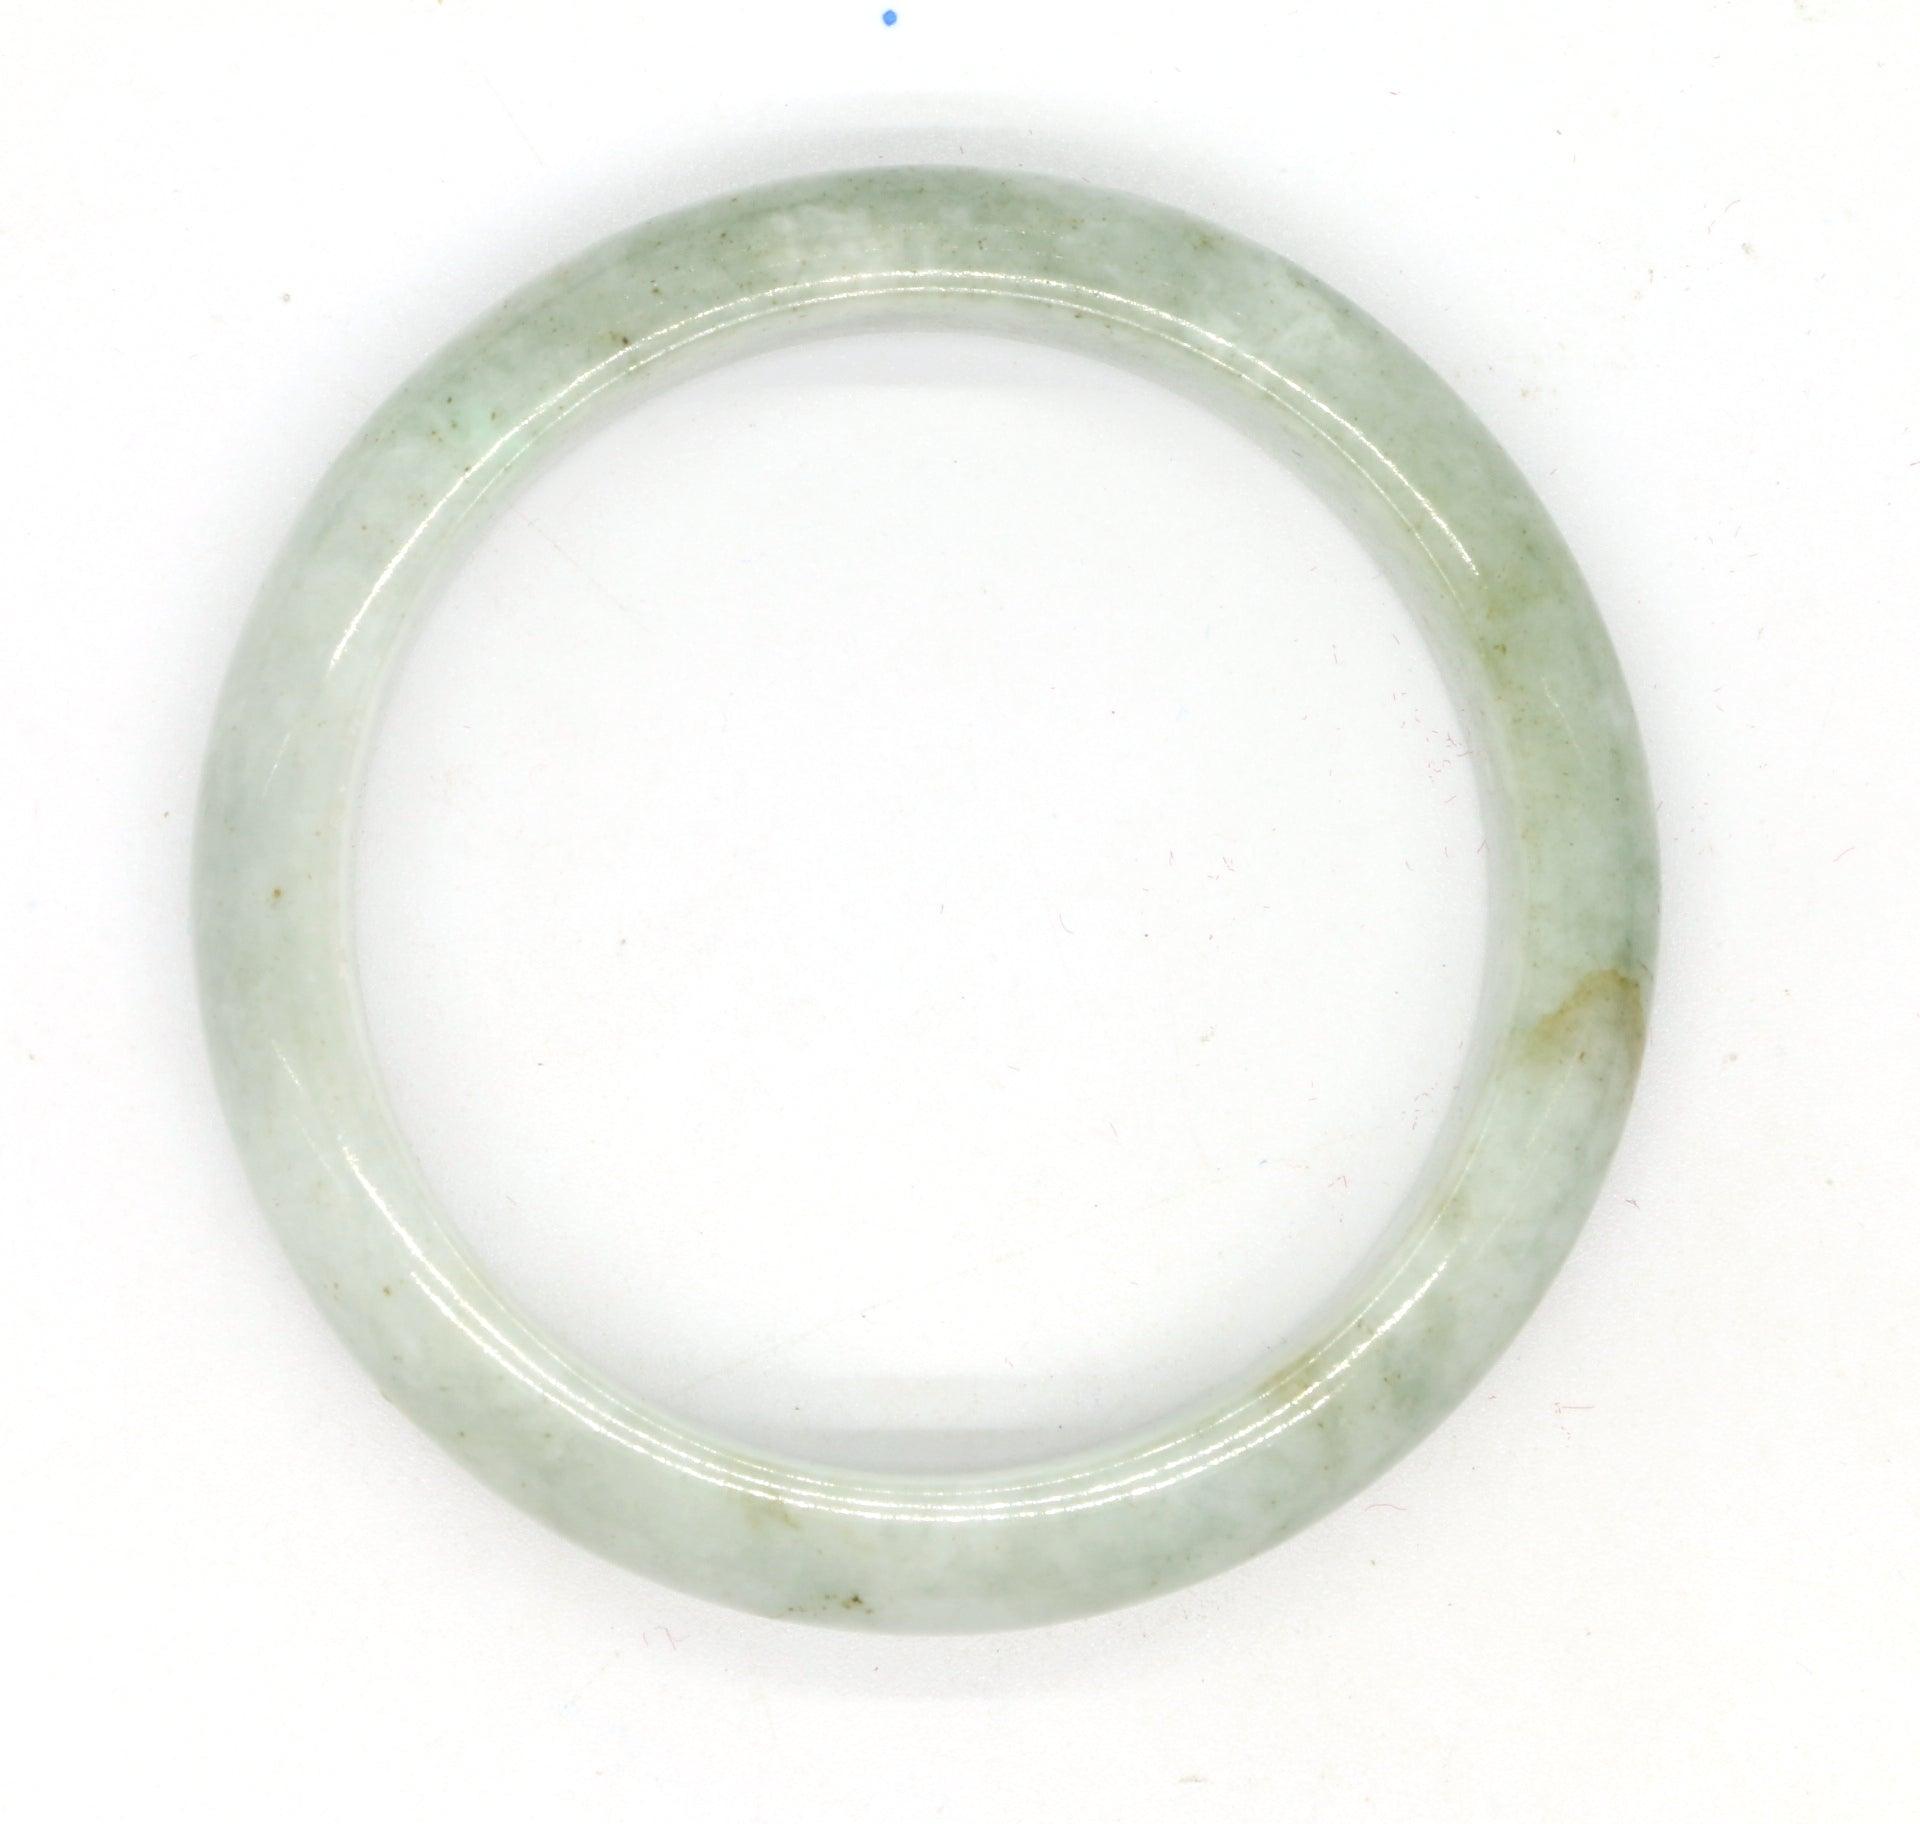 Type A Certified Jadeite Jade Bangle Size 56 -58mm B0BNDPN5ZR - Jade-collector.com